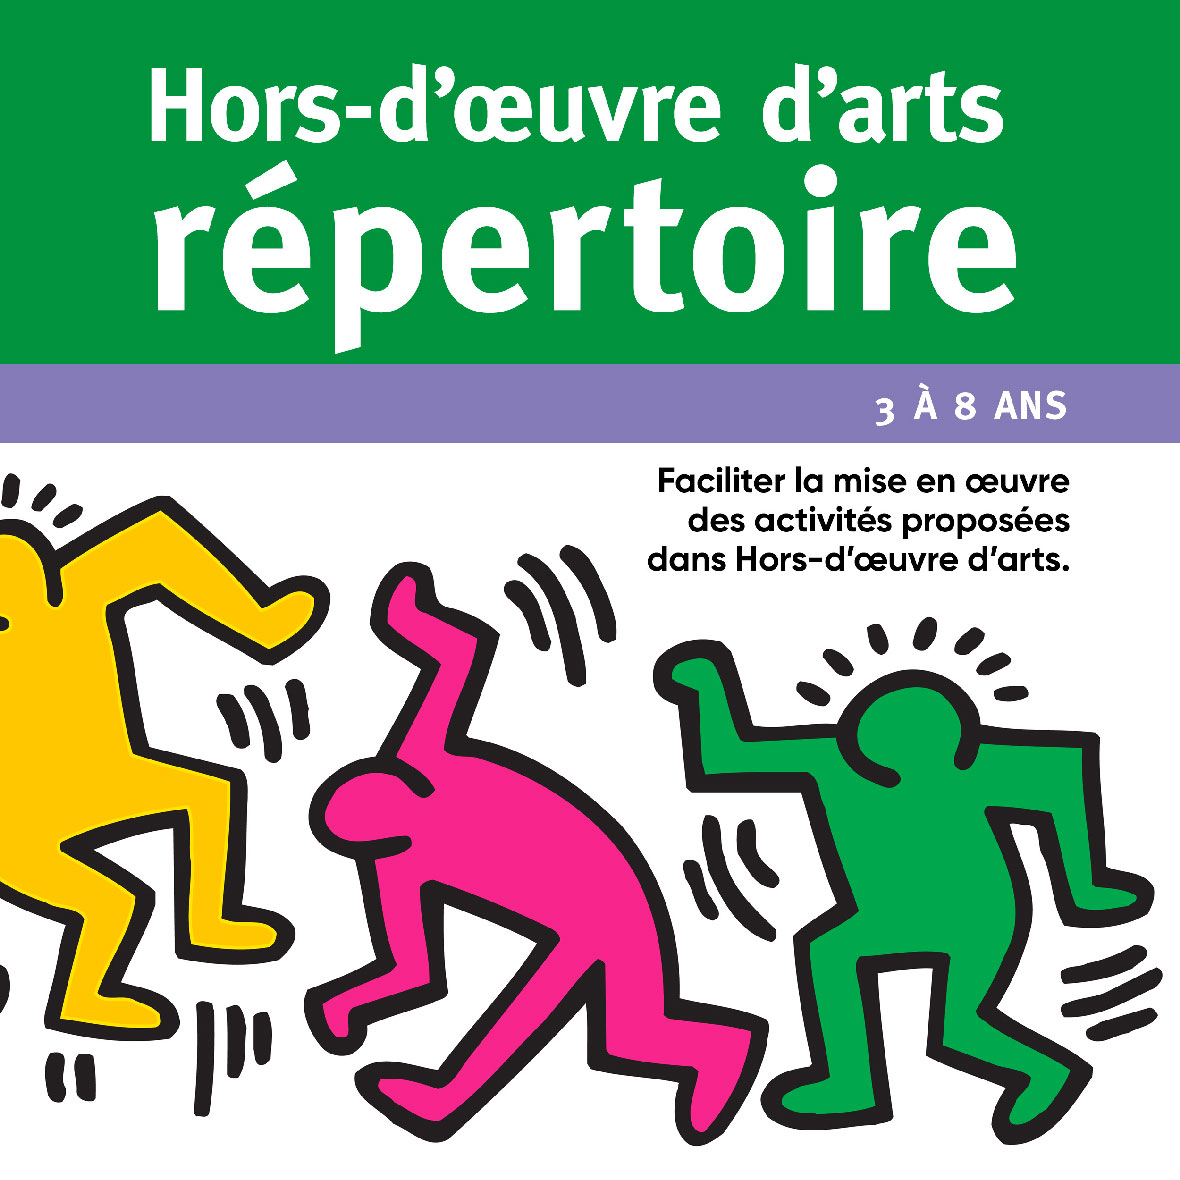 Hors d oeuvre d arts repertoire miniature 1 acces editions